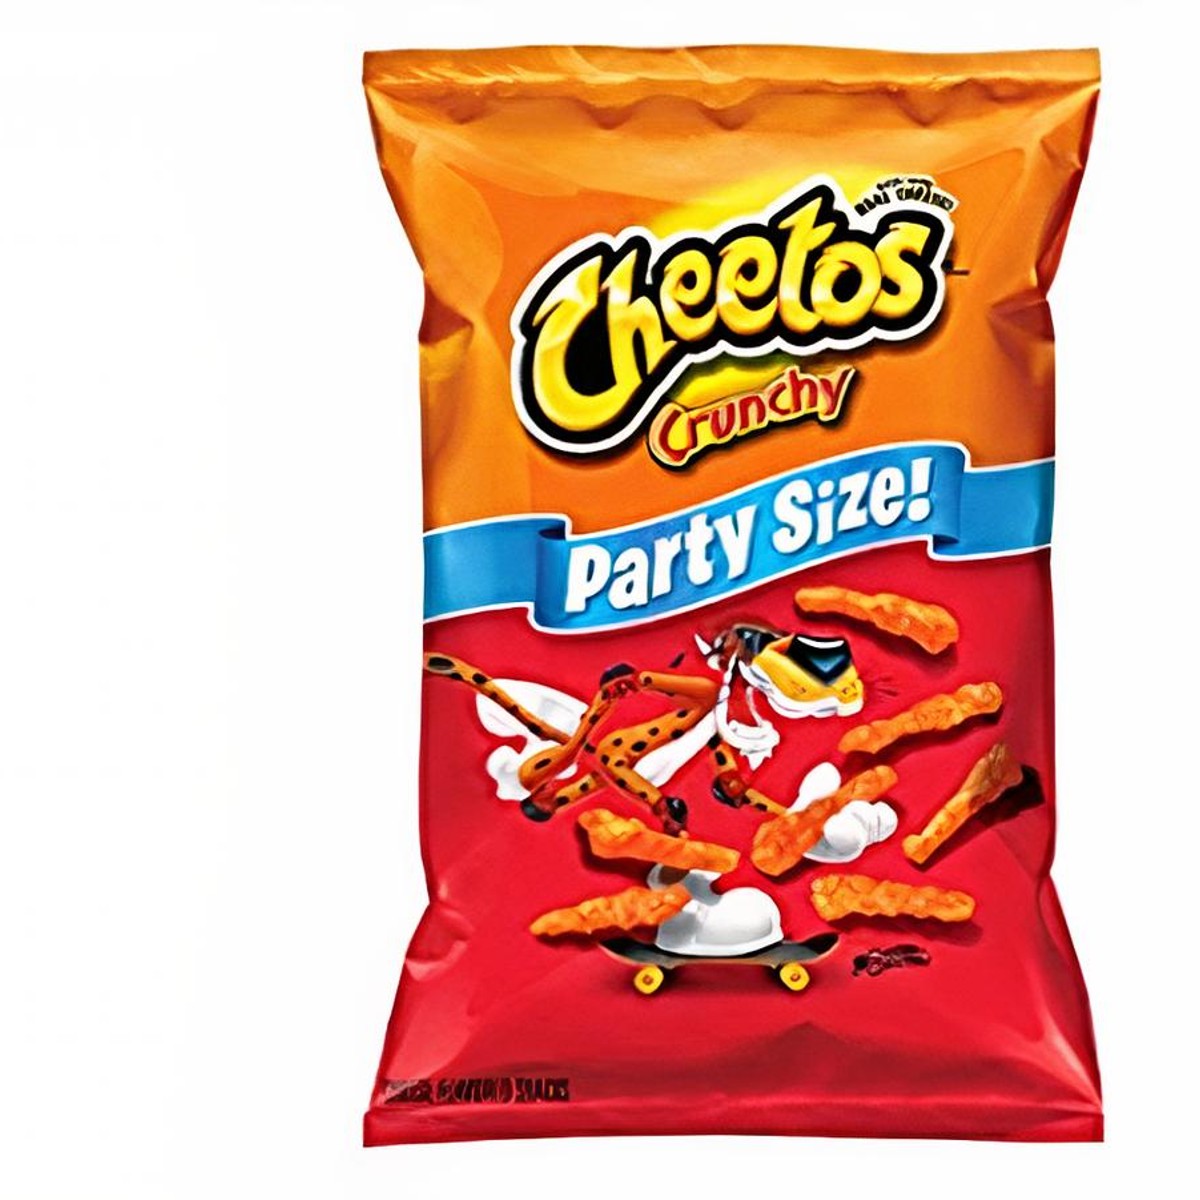 Cheetos Crunchy Cheese Snacks (2 oz., 64 ct.) - Sam's Club